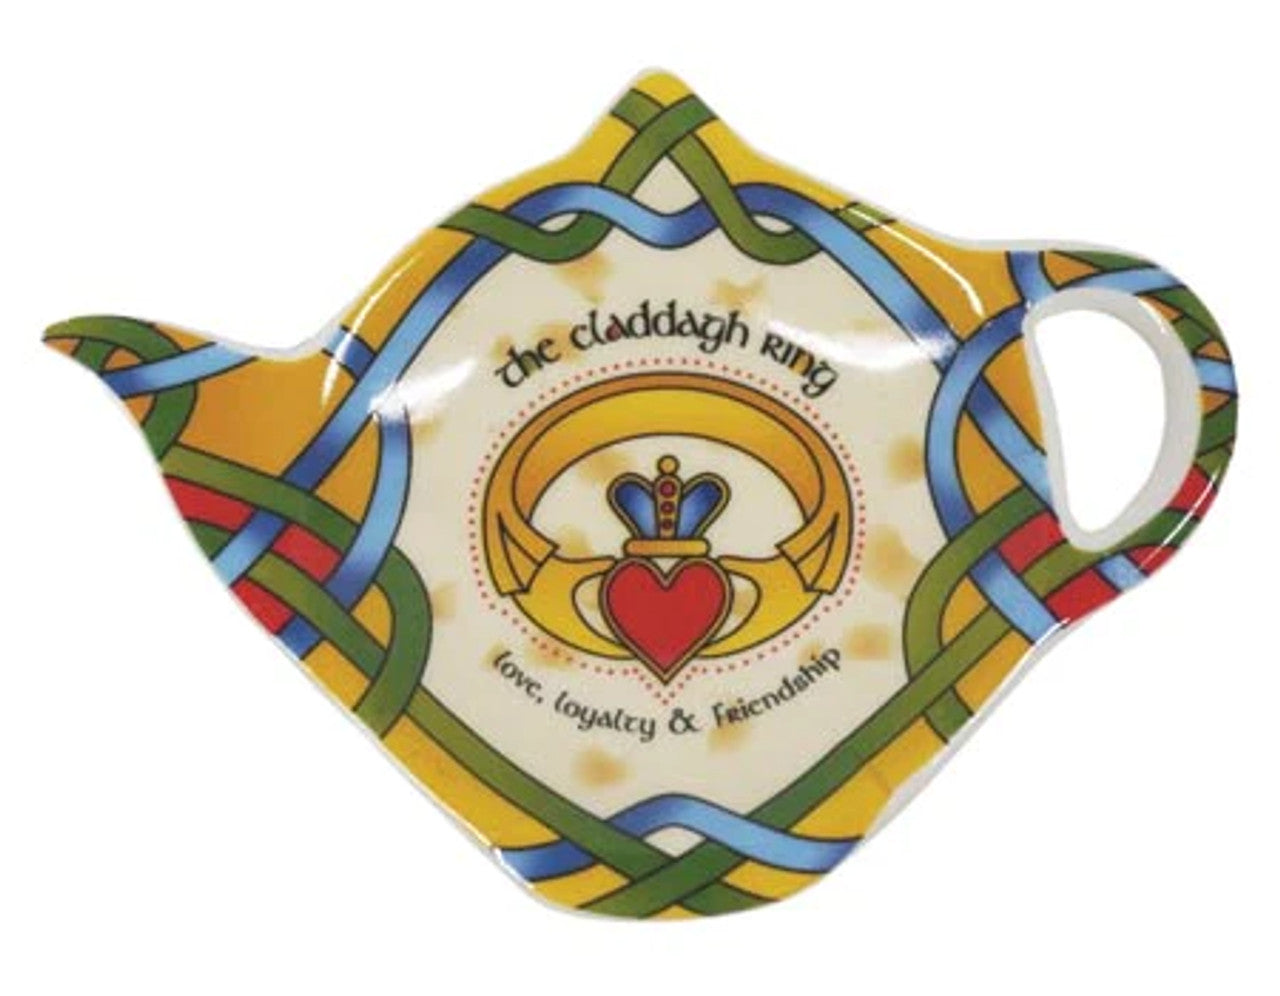 Irish Claddagh Ring Teabag Holder